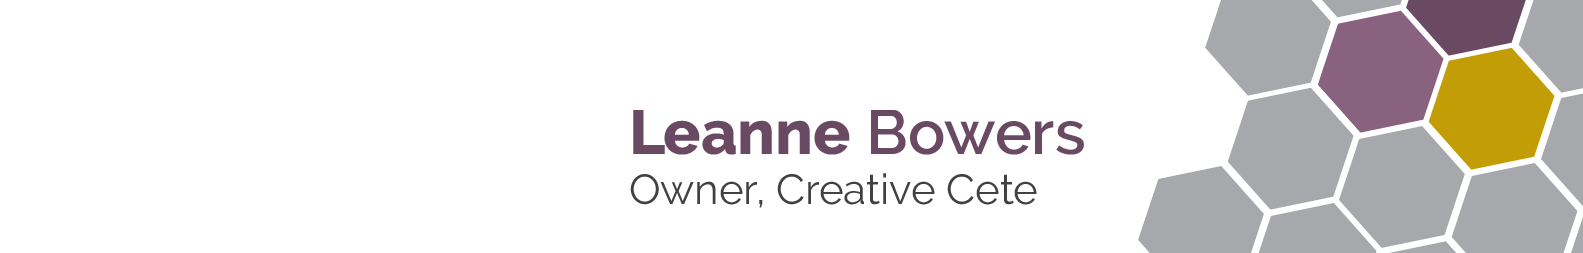 Leanne Bowerss profilbanner